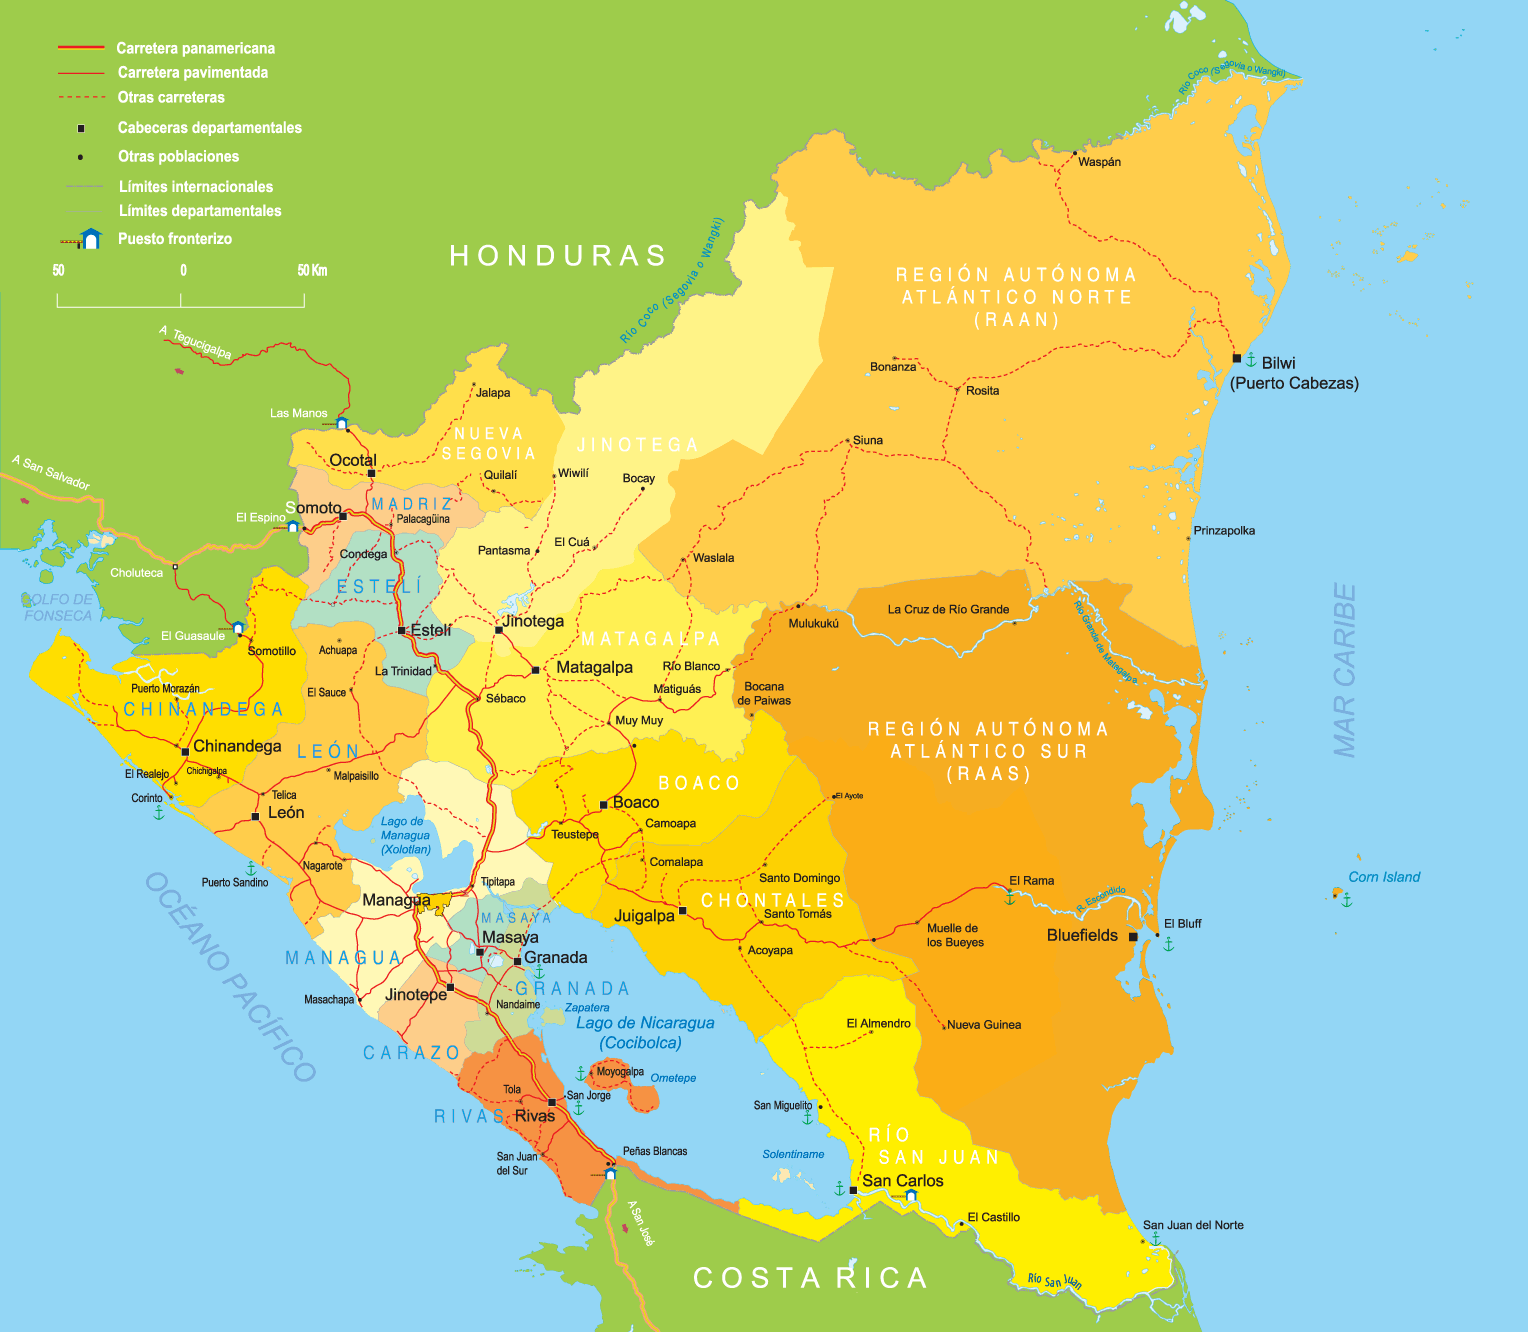 maps of Nicaragua - a link atlas